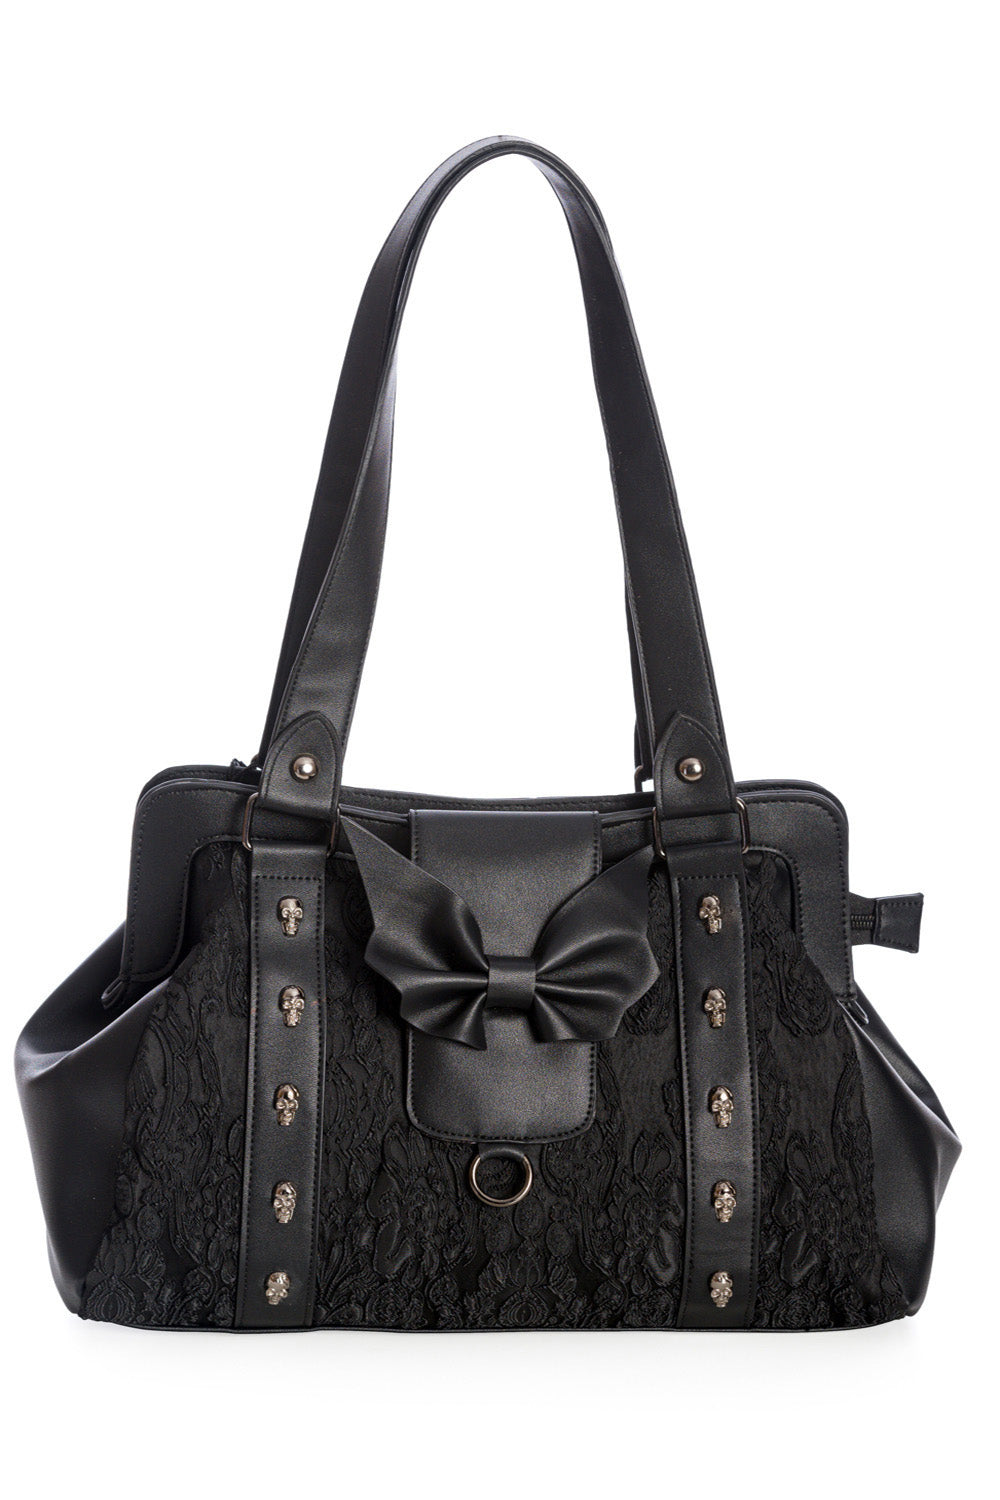 Maplesage Handbag [BLACK]